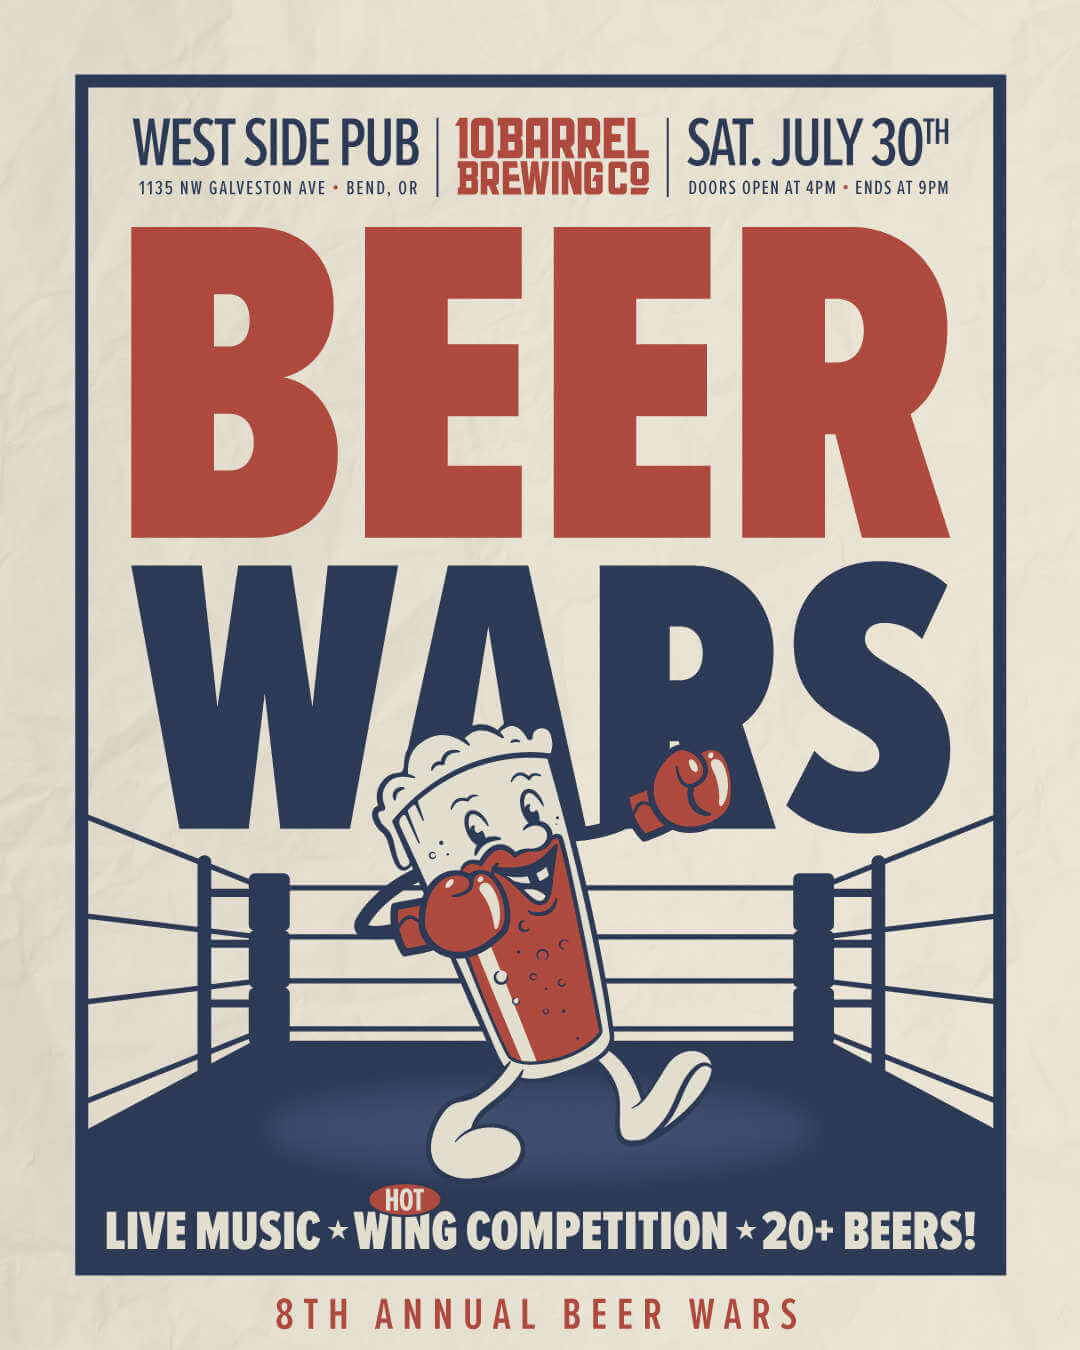 Beer Wars returns to 10 Barrel this weekend